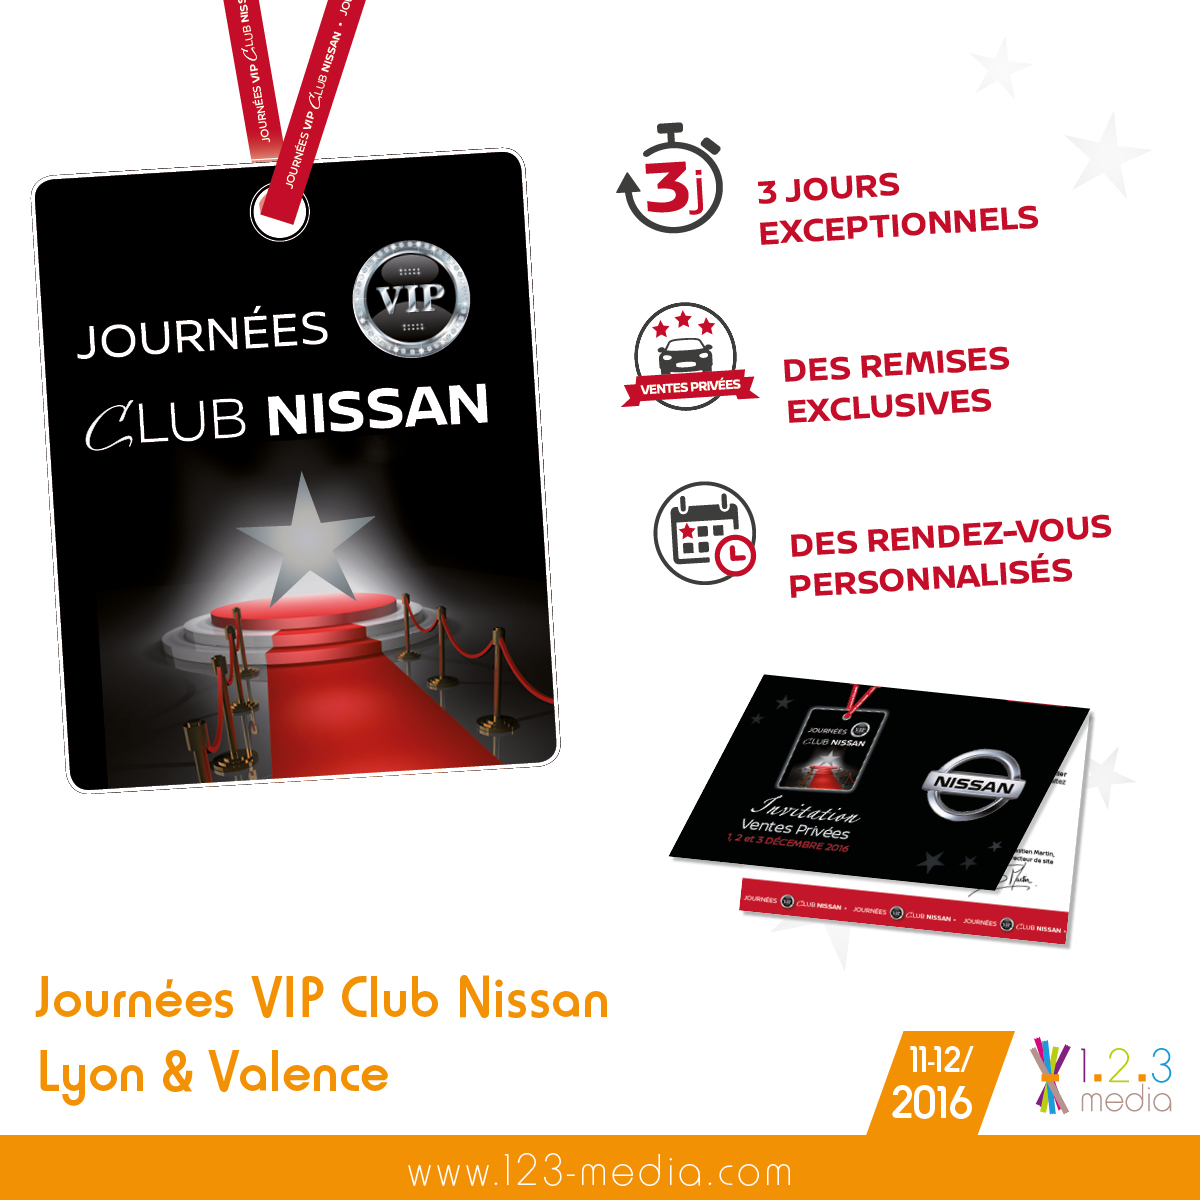 journees_vip_club_nissan_lyon_valence